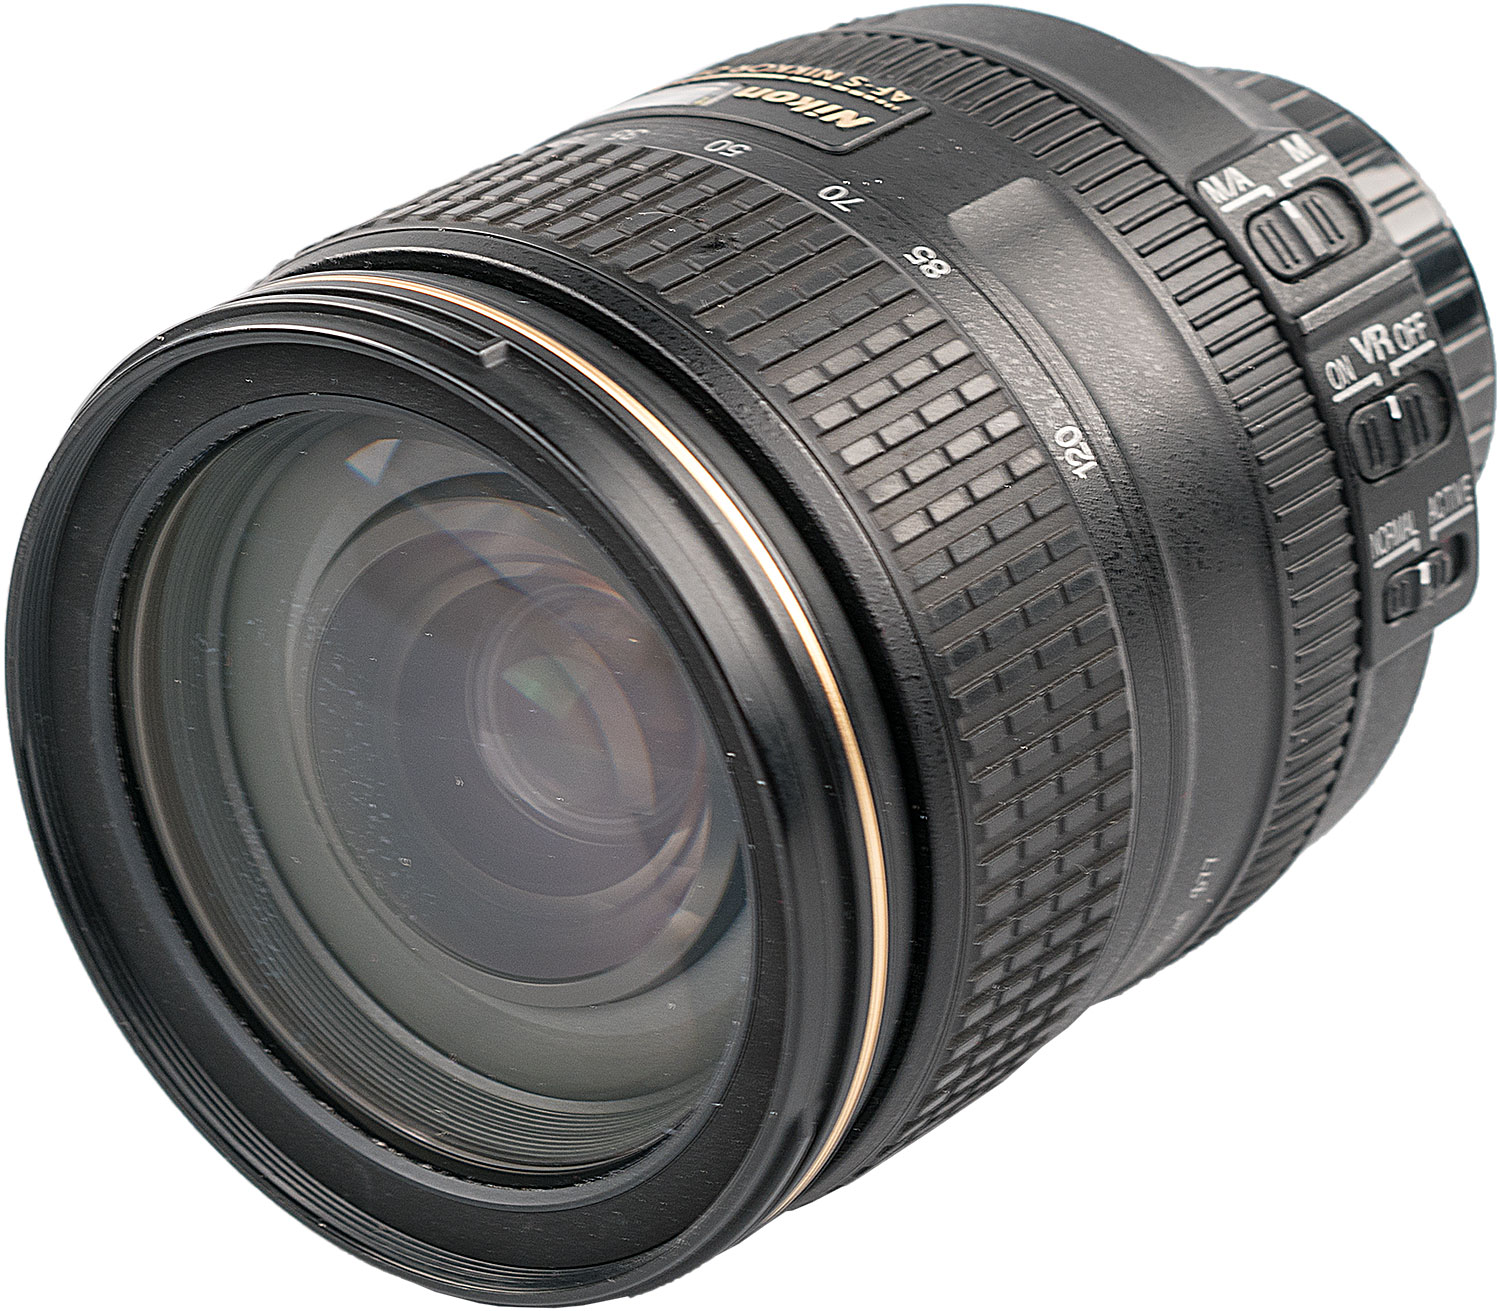 24 120mm f 4g ed vr. Nikon 24-120mm f/4g ed VR af-s Nikkor. Nikkor 24-120mm f/4g ed VR.